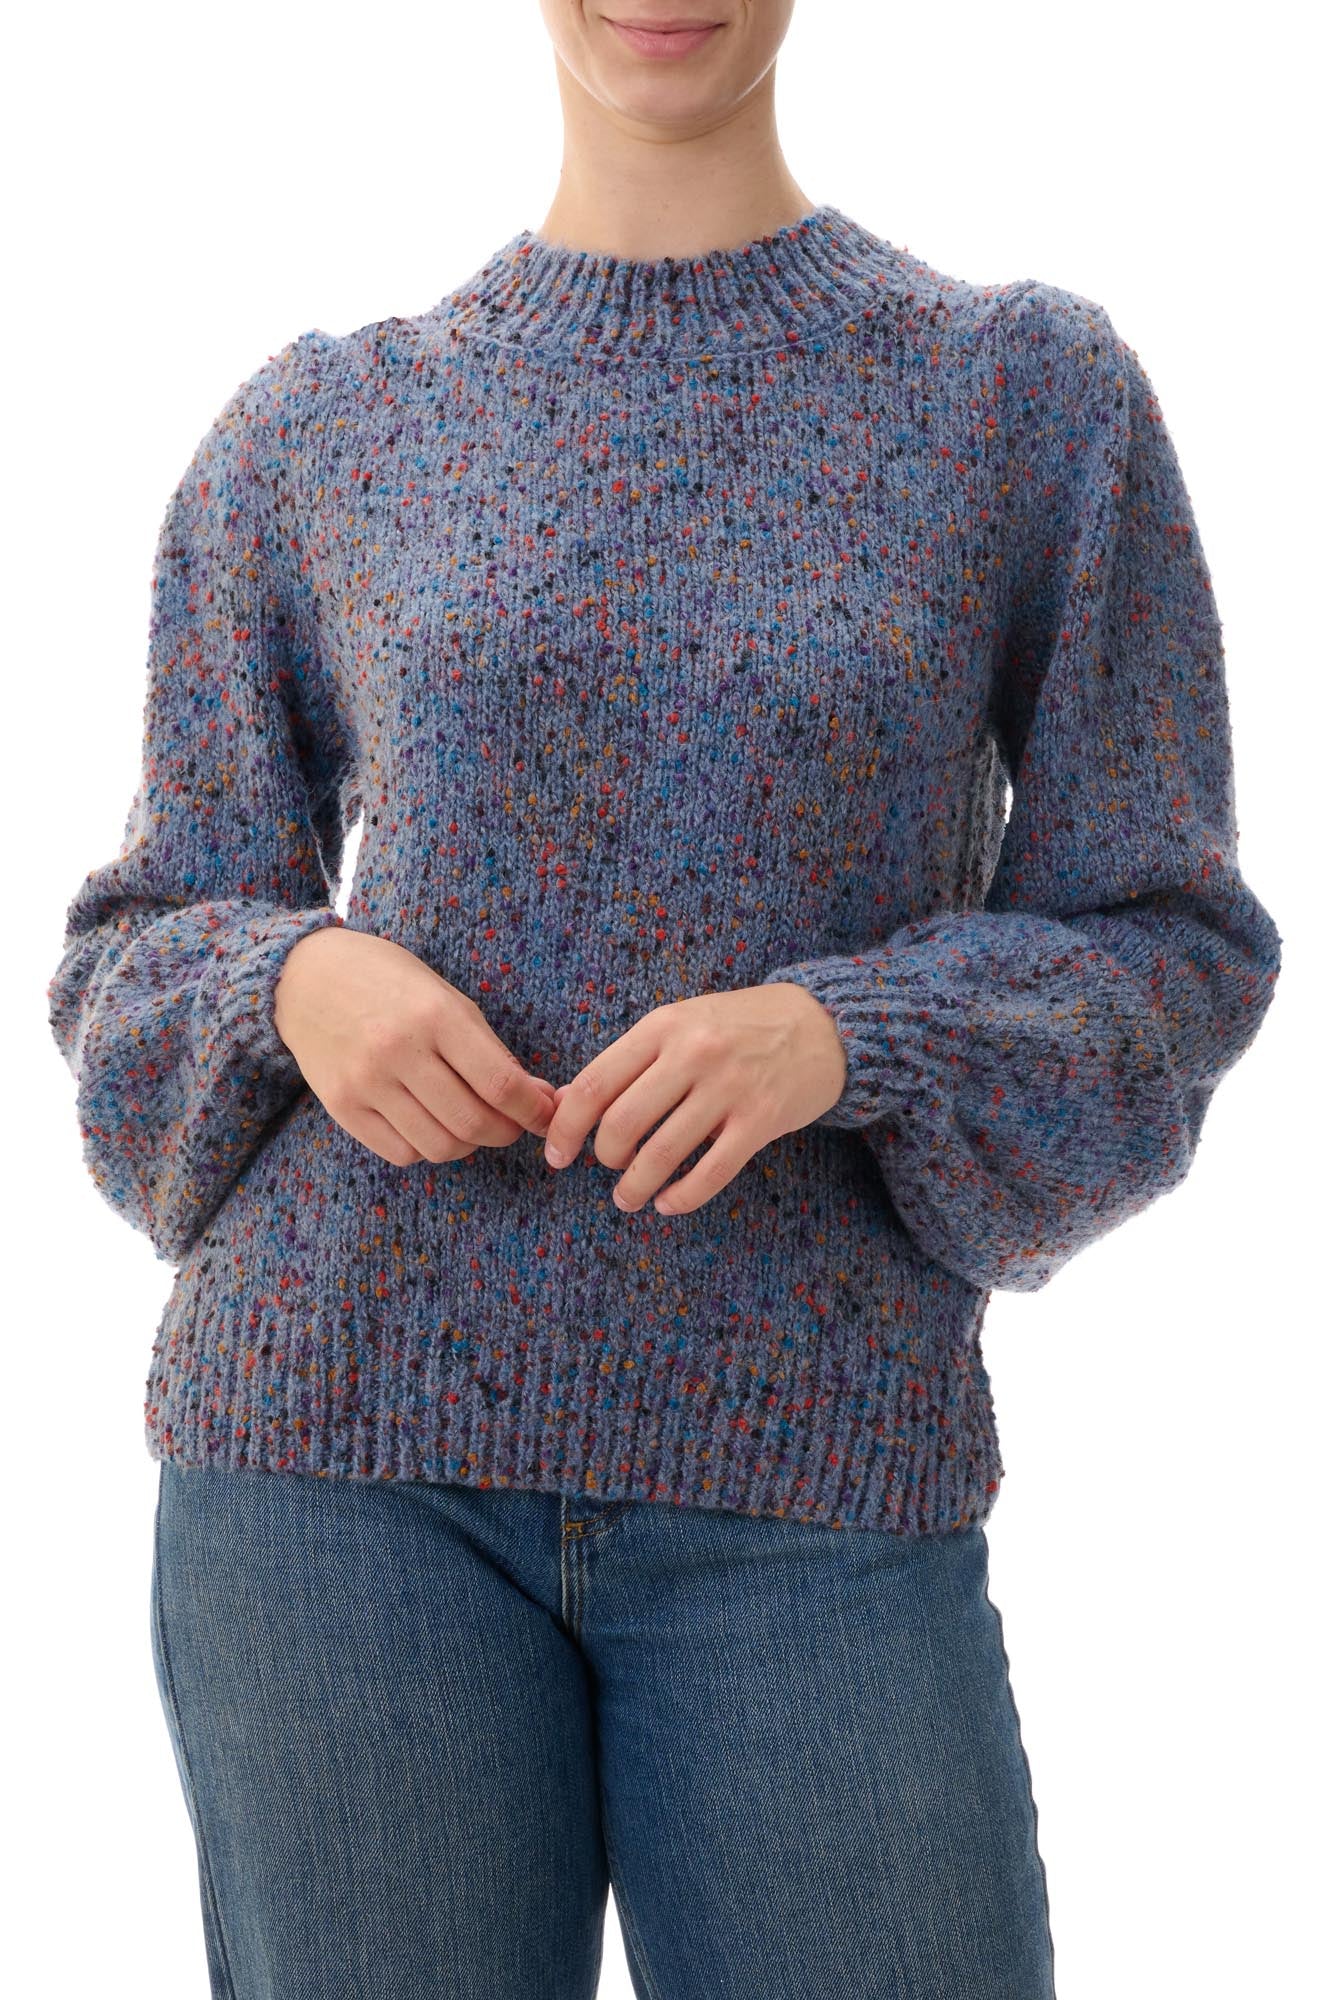 3QD213 - Speckled knit